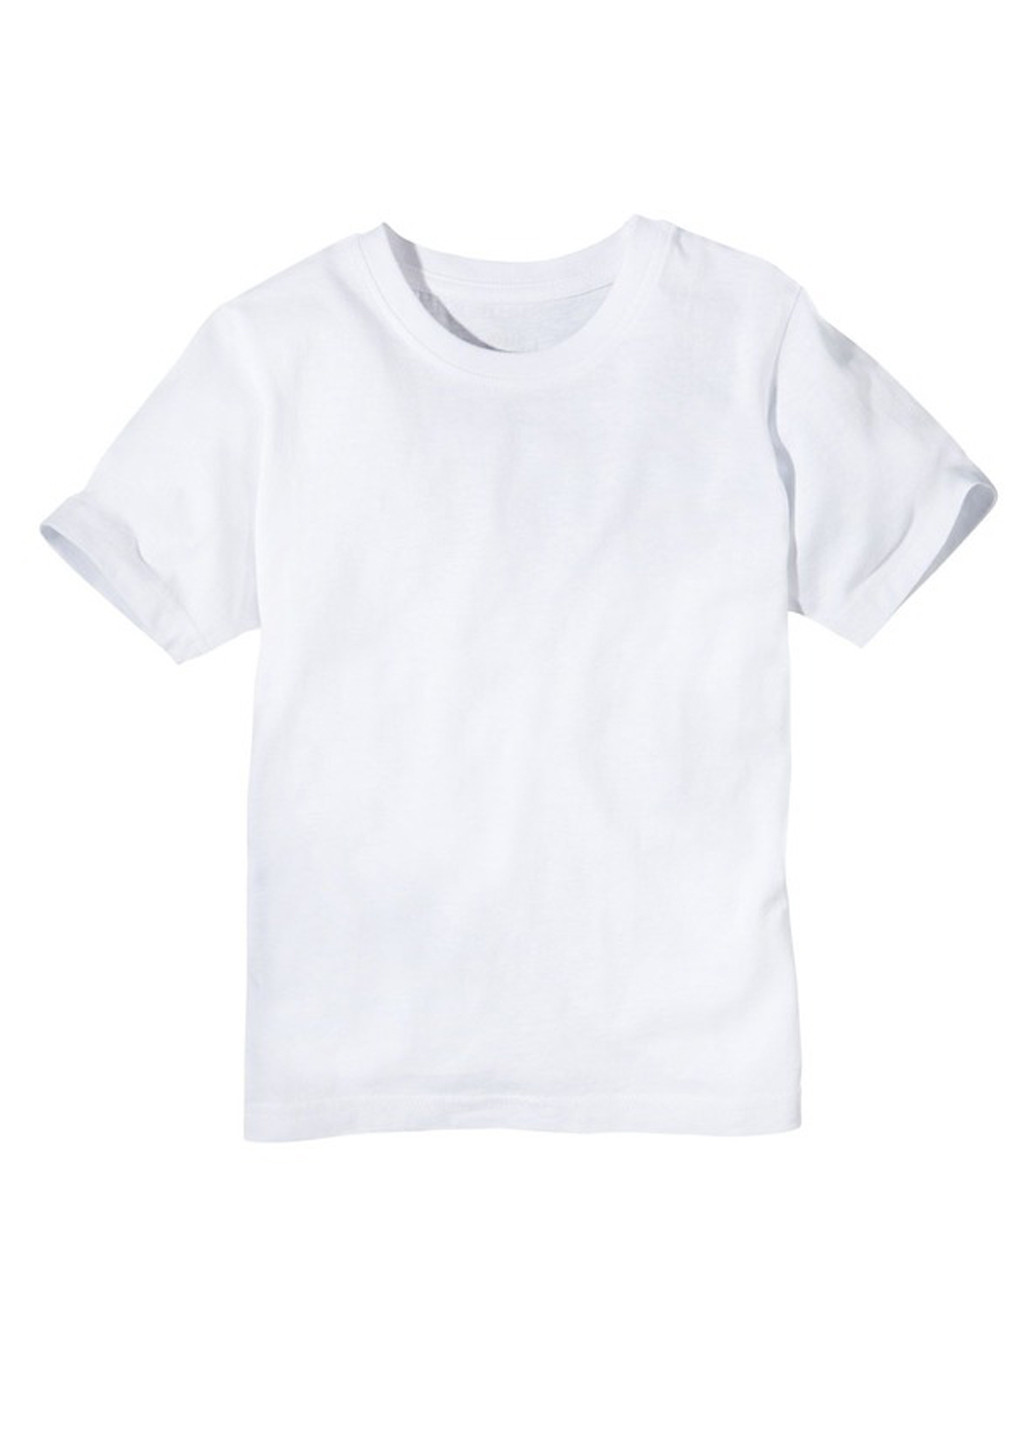 Белая летняя футболка с коротким рукавом Young Dimension